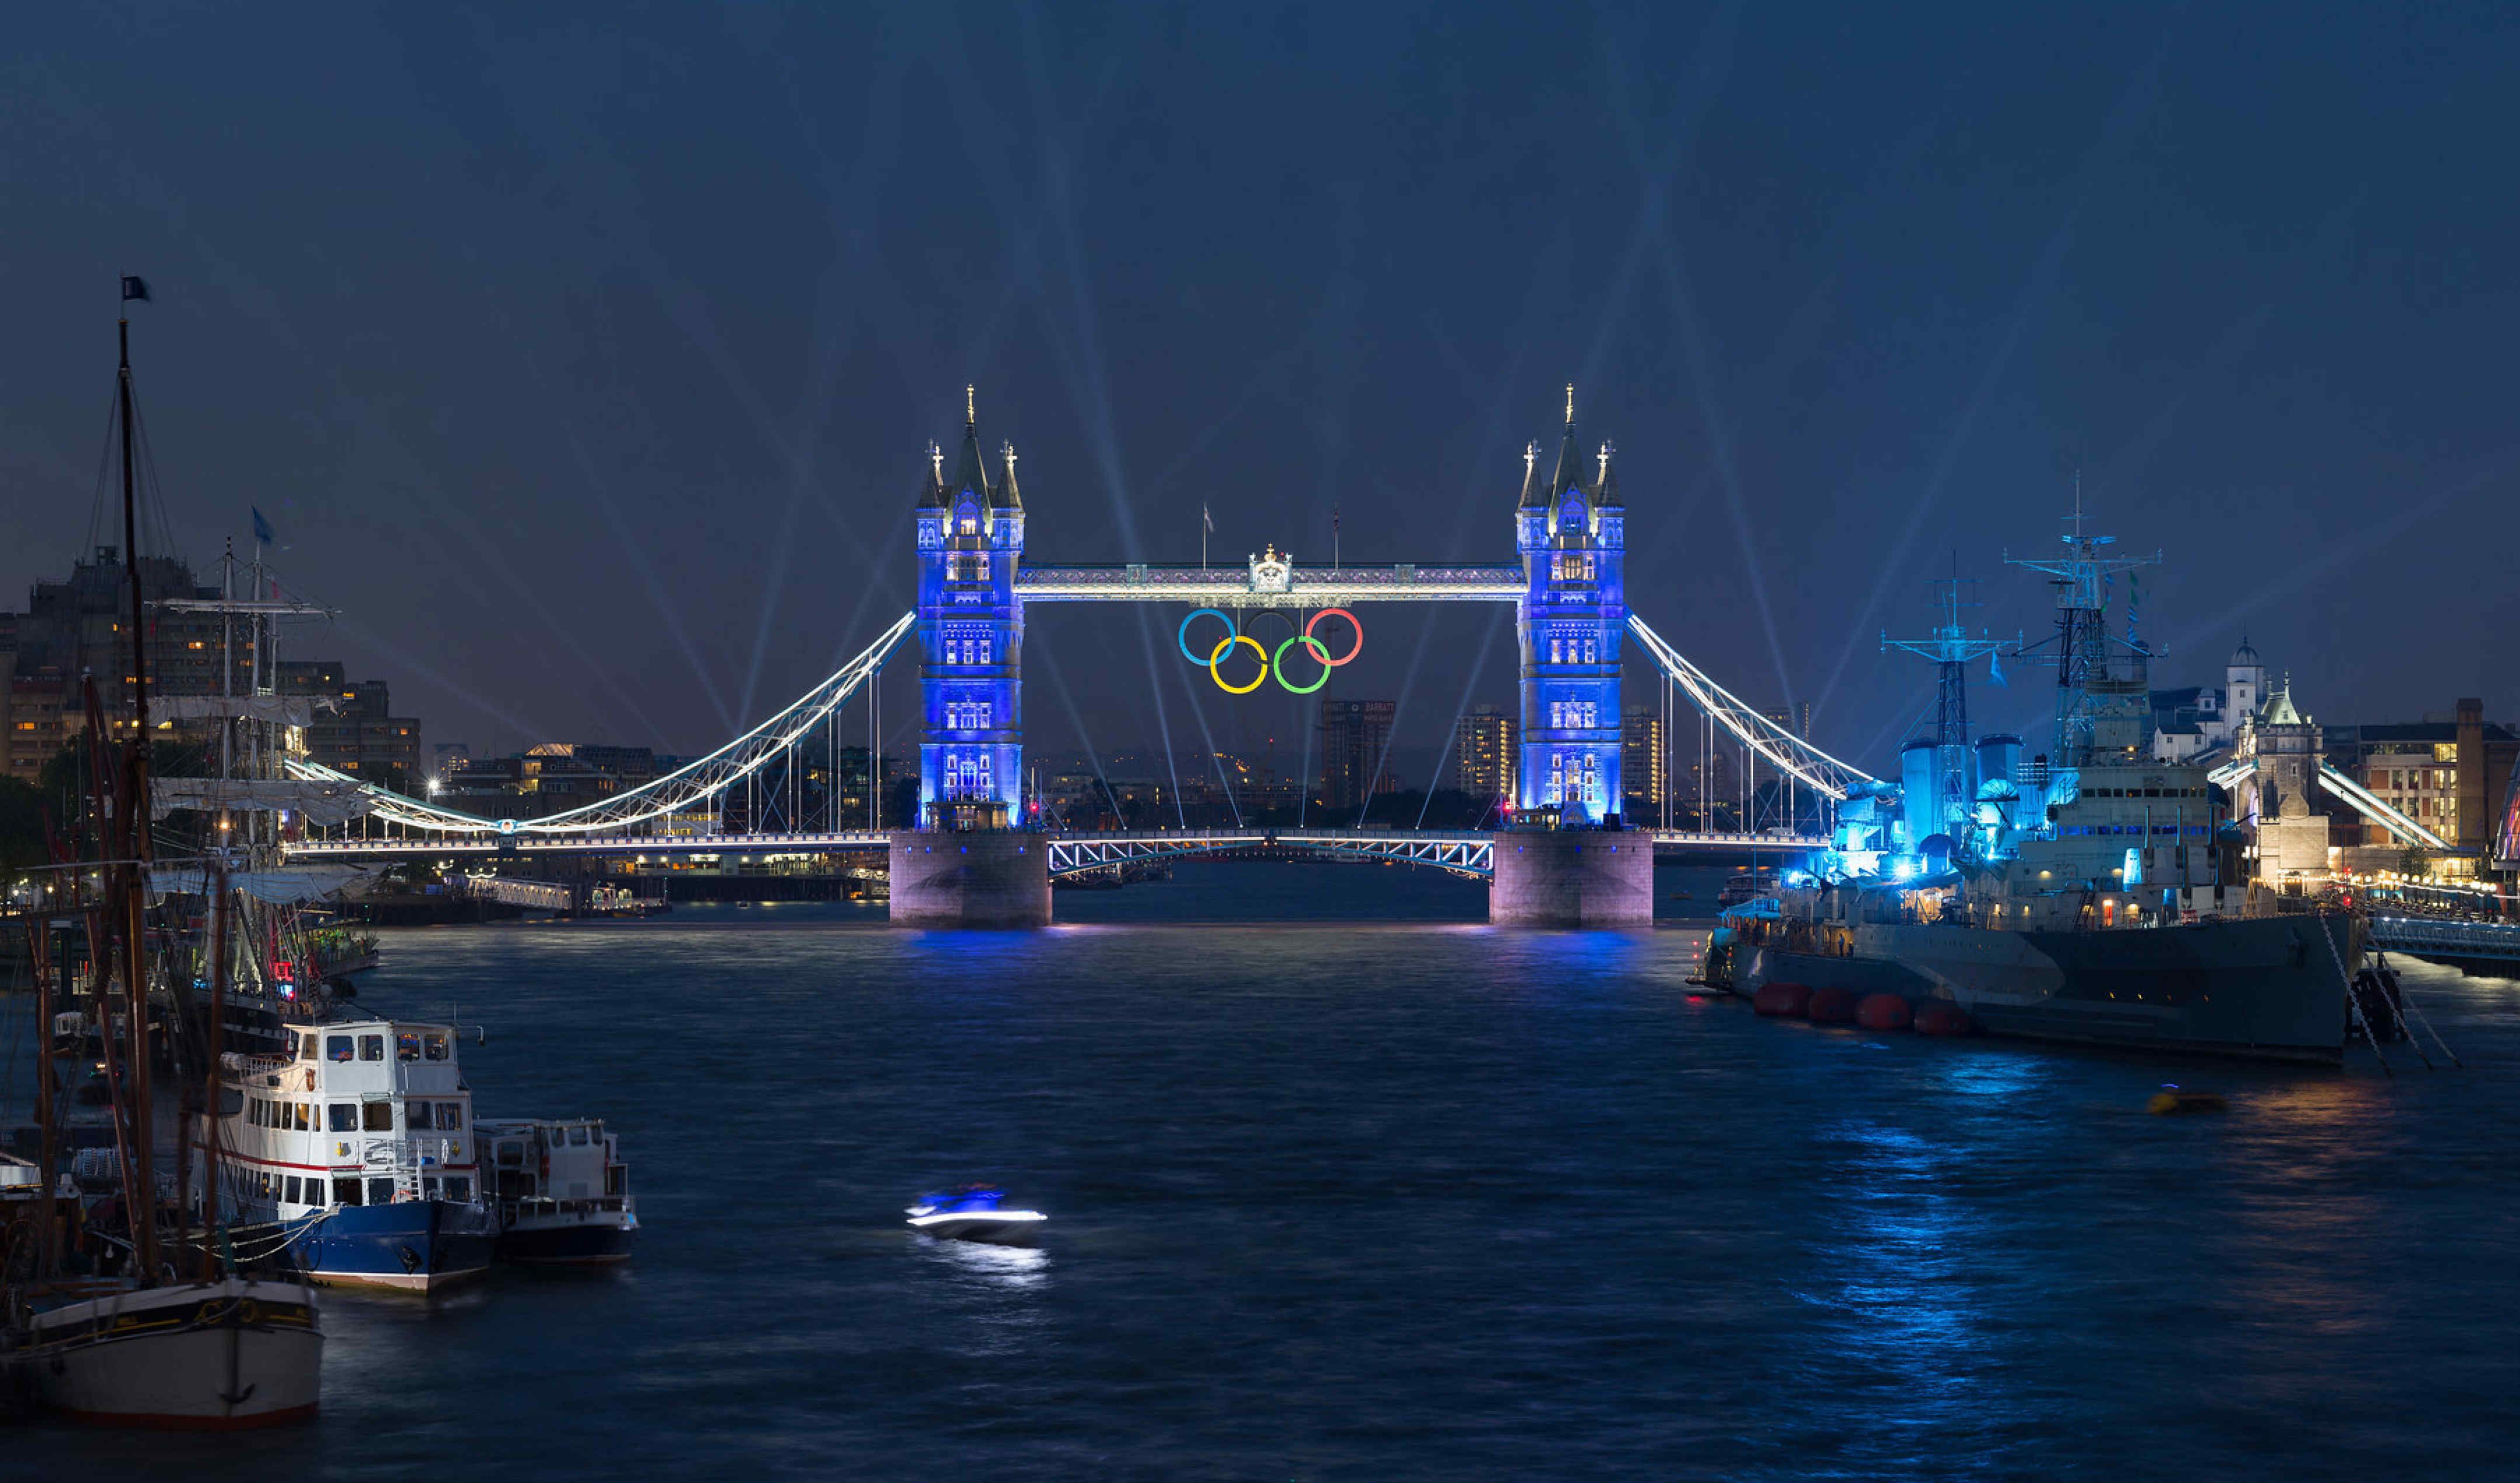 Olympic Symbol on the Tower Bridge